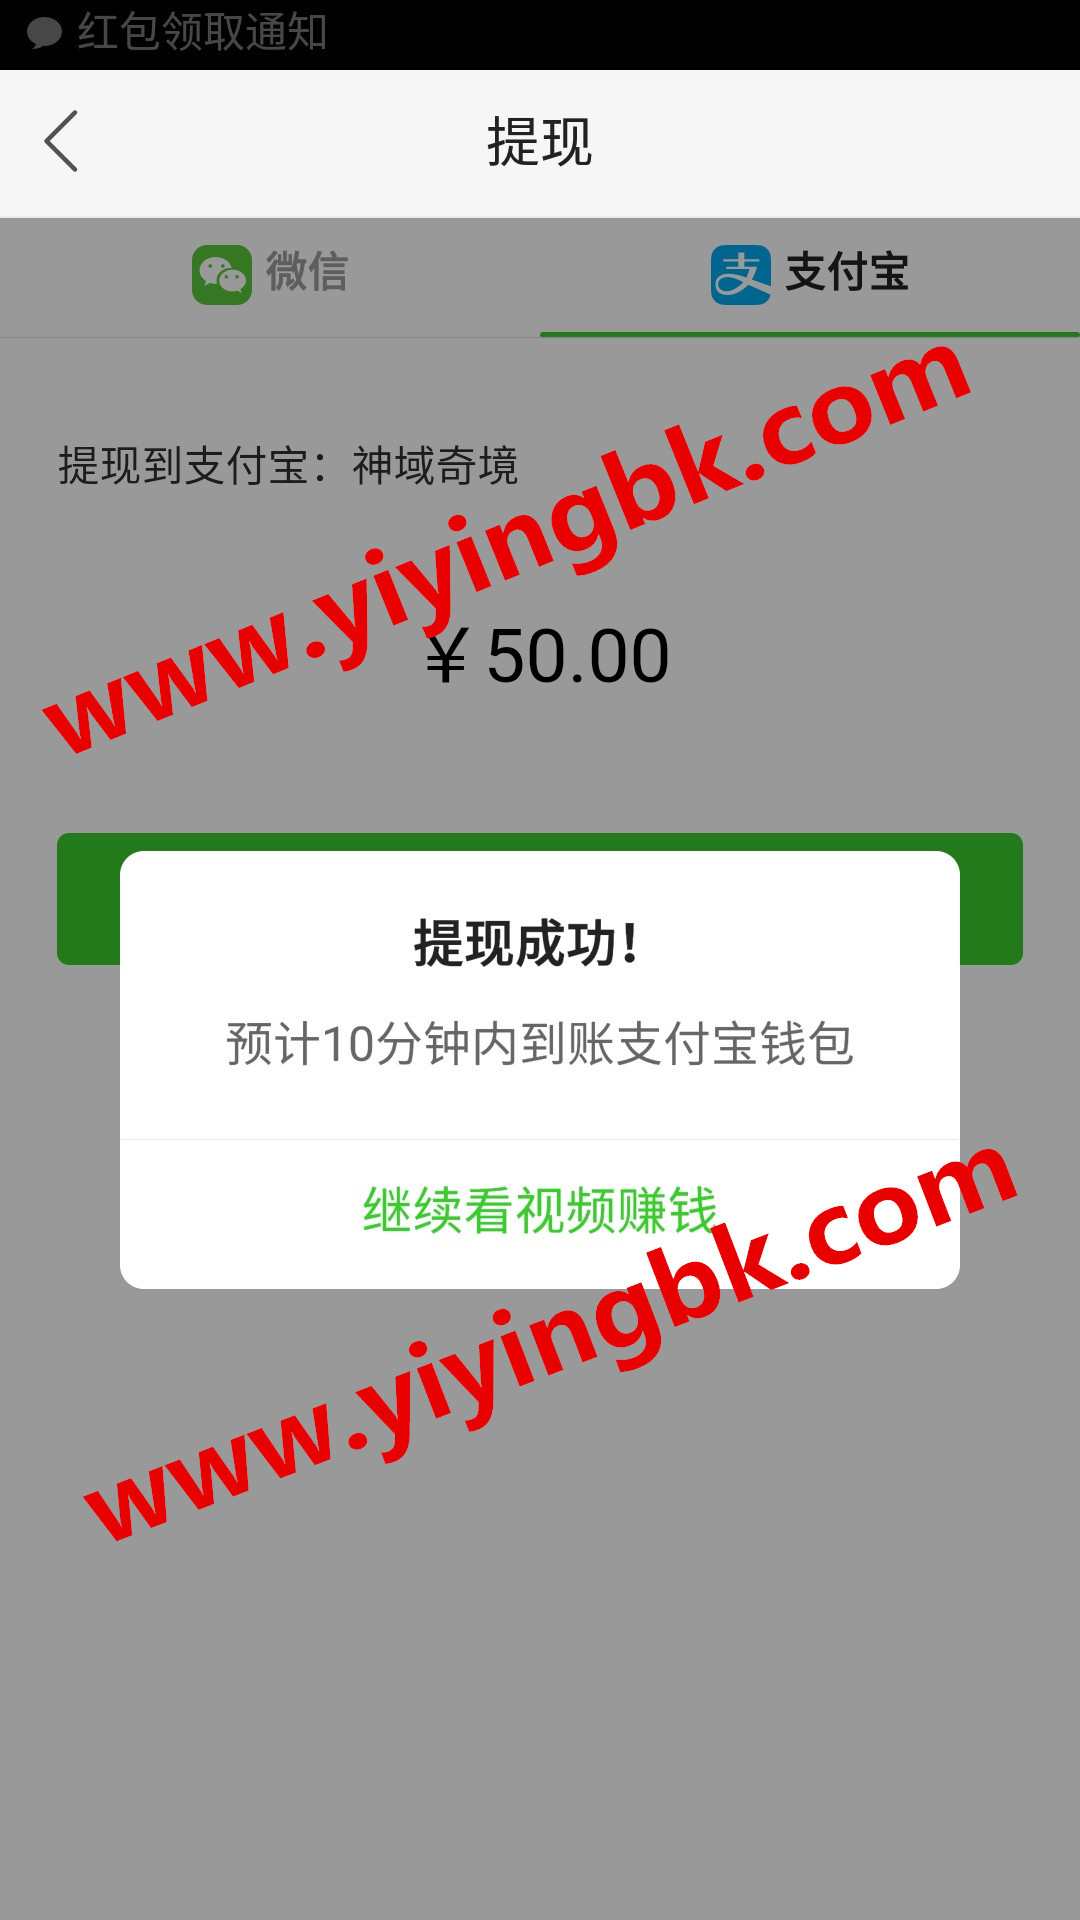 提示提现成功，www.yiyingbk.com